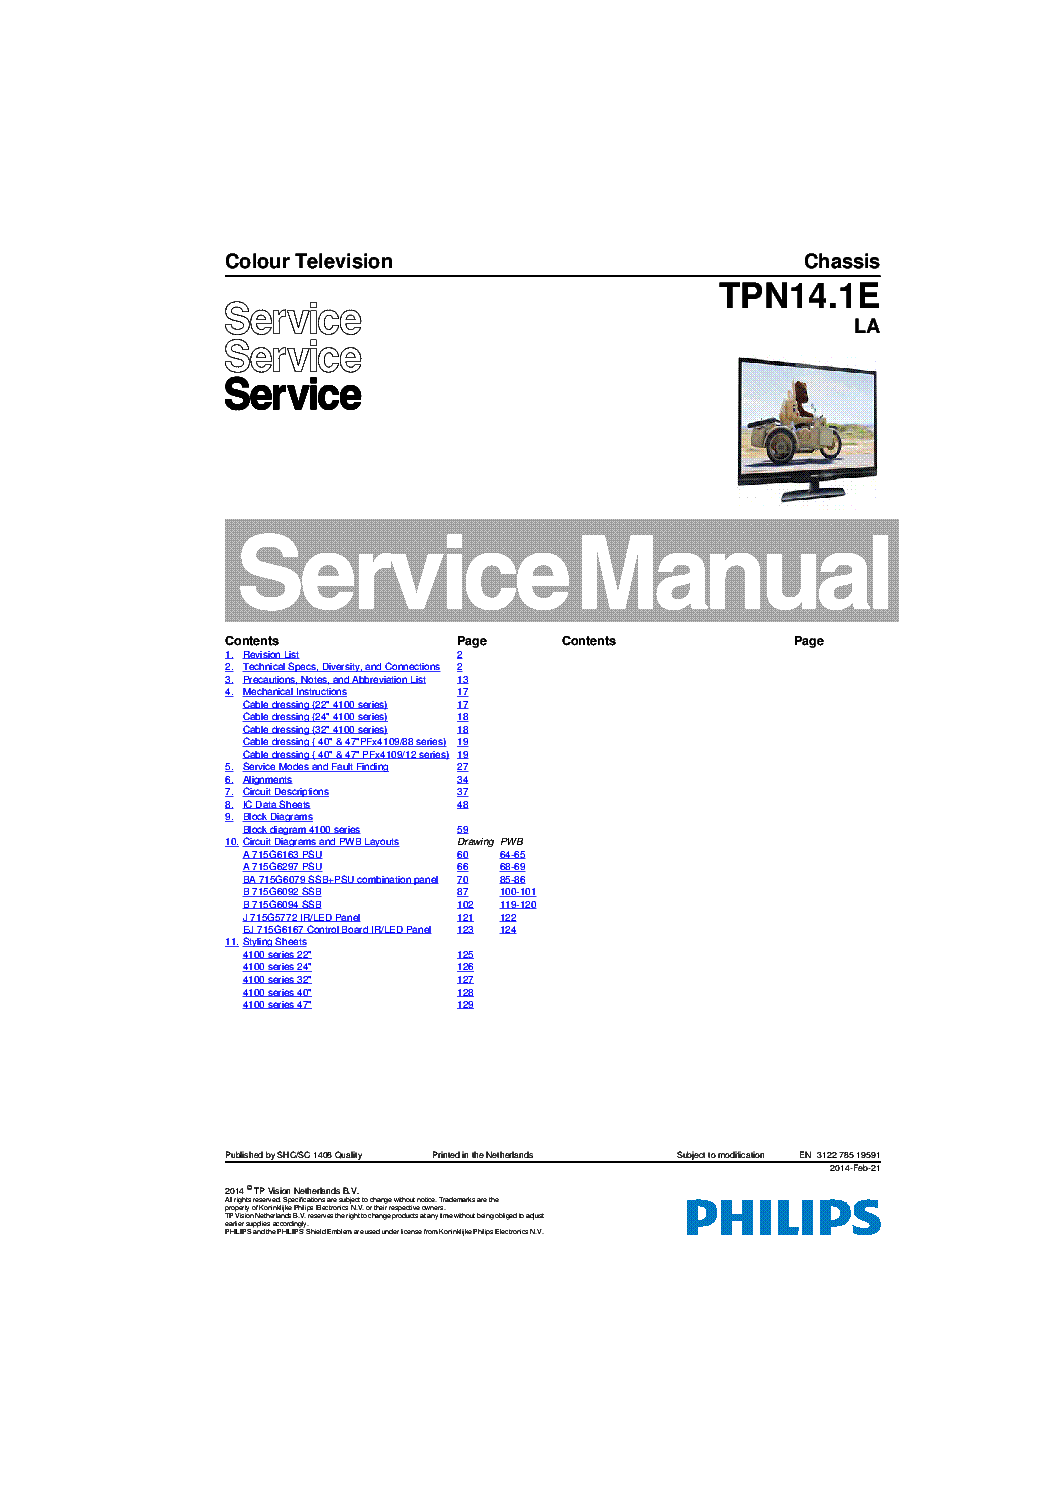 PHILIPS 32PHH410988 CHASSIS TPN14-1E-LA service manual (1st page)